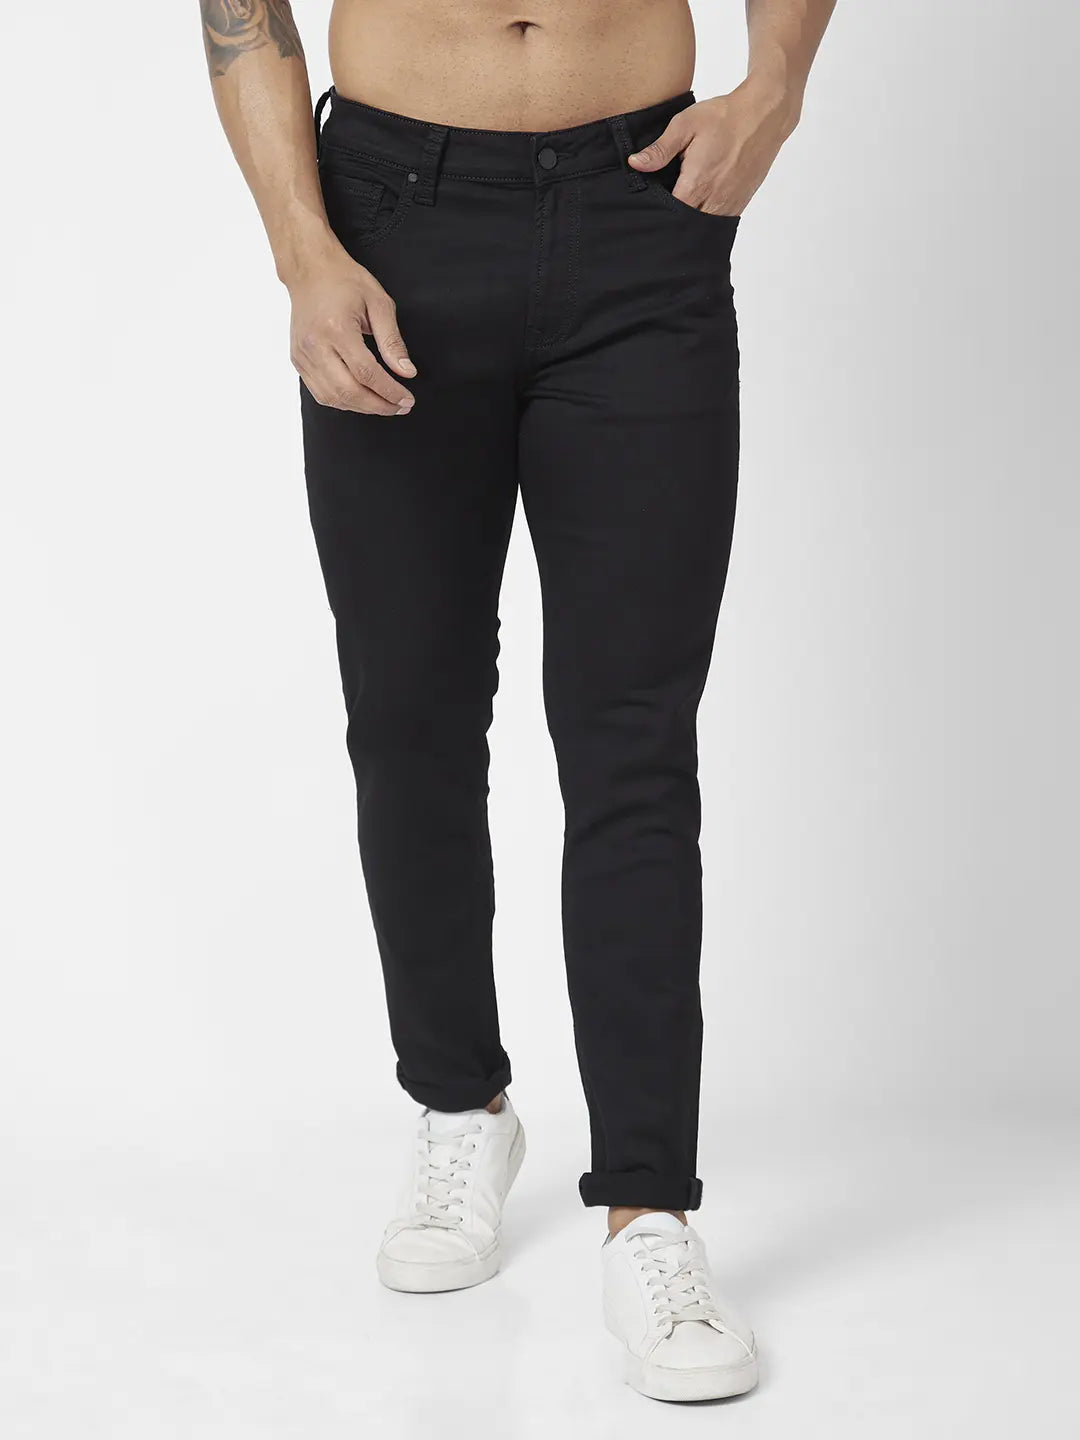 Spykar Men Black Cotton Stretch Super Slim Fit Tapered Length Clean Look Low Rise Jeans (Super Skinny)